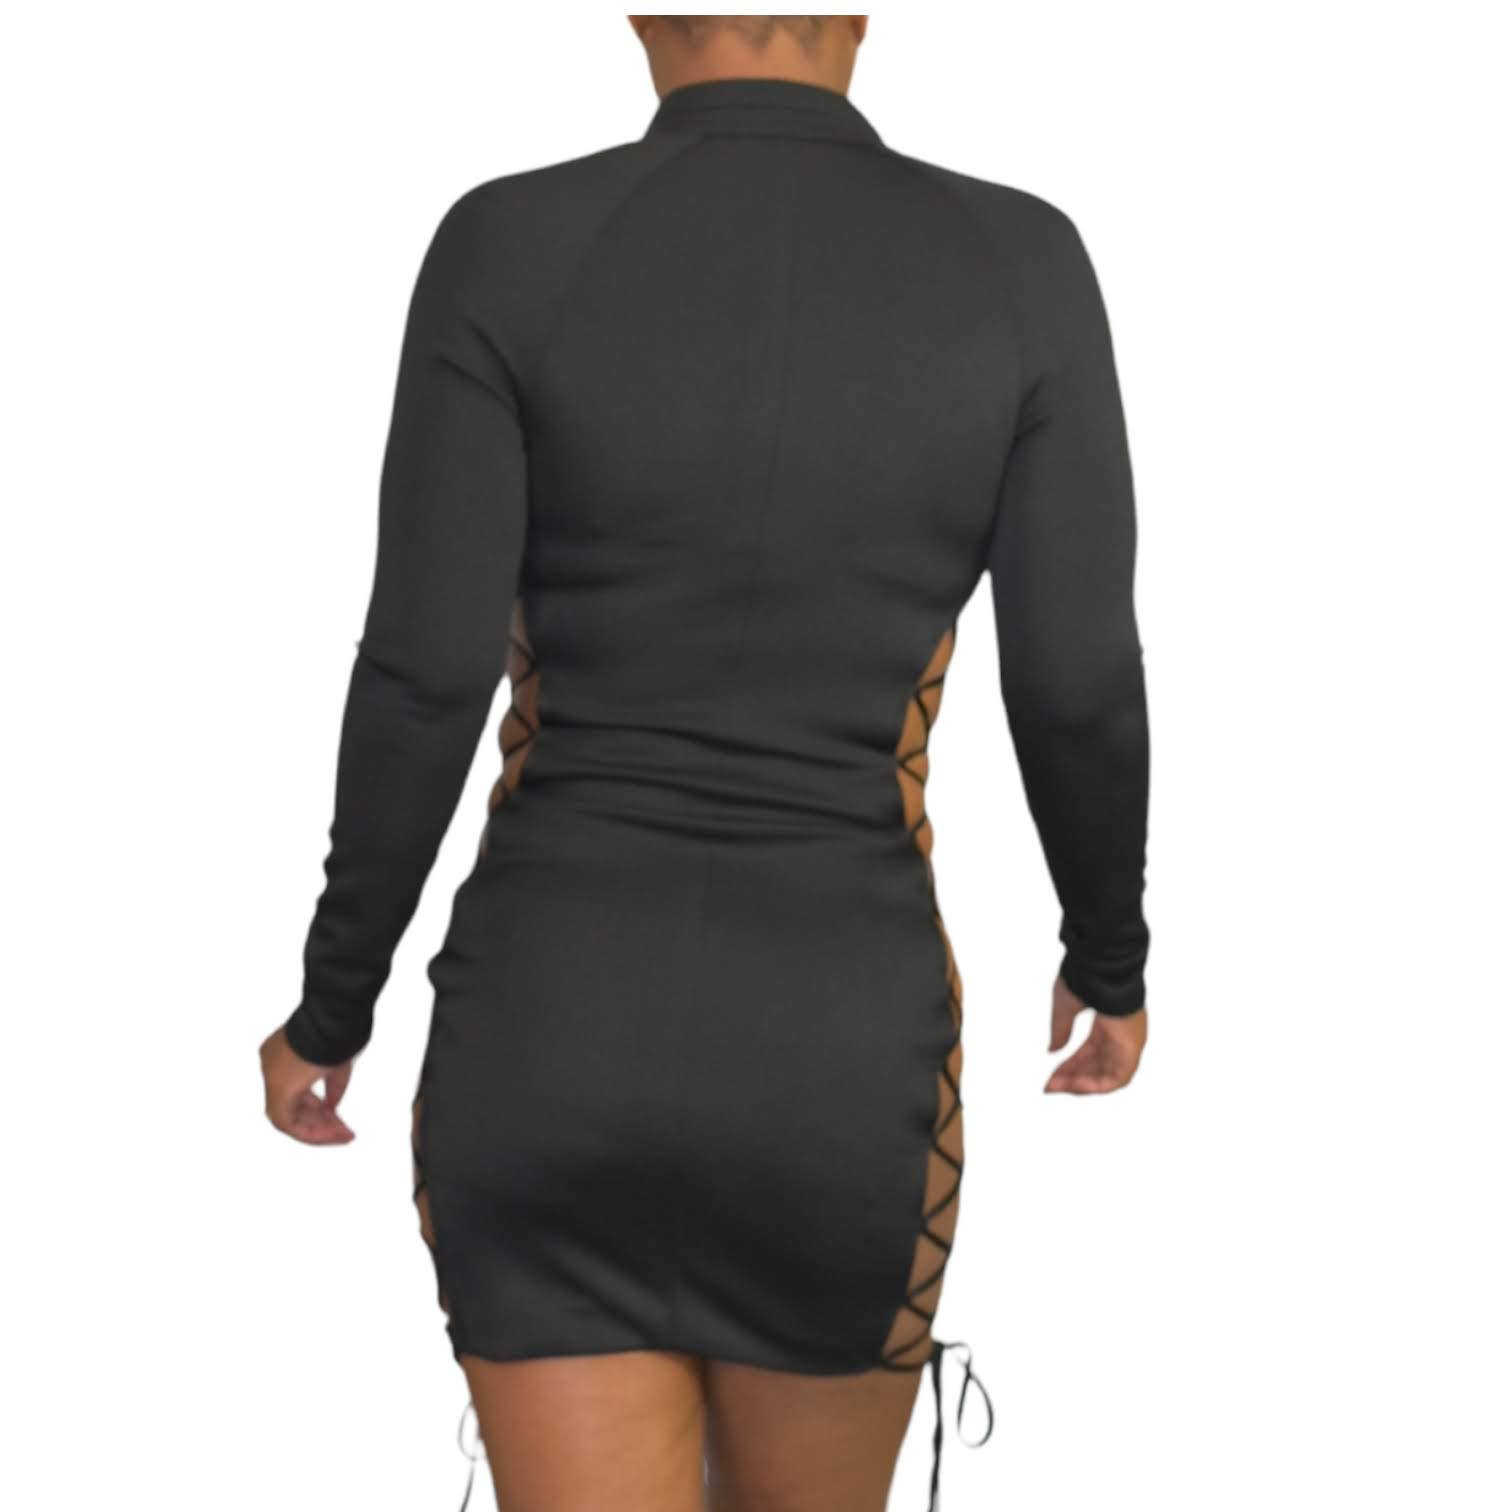 Mistress Rocks Prestige Black Mini Dress Scuba Neoprene Side Laced Size Small